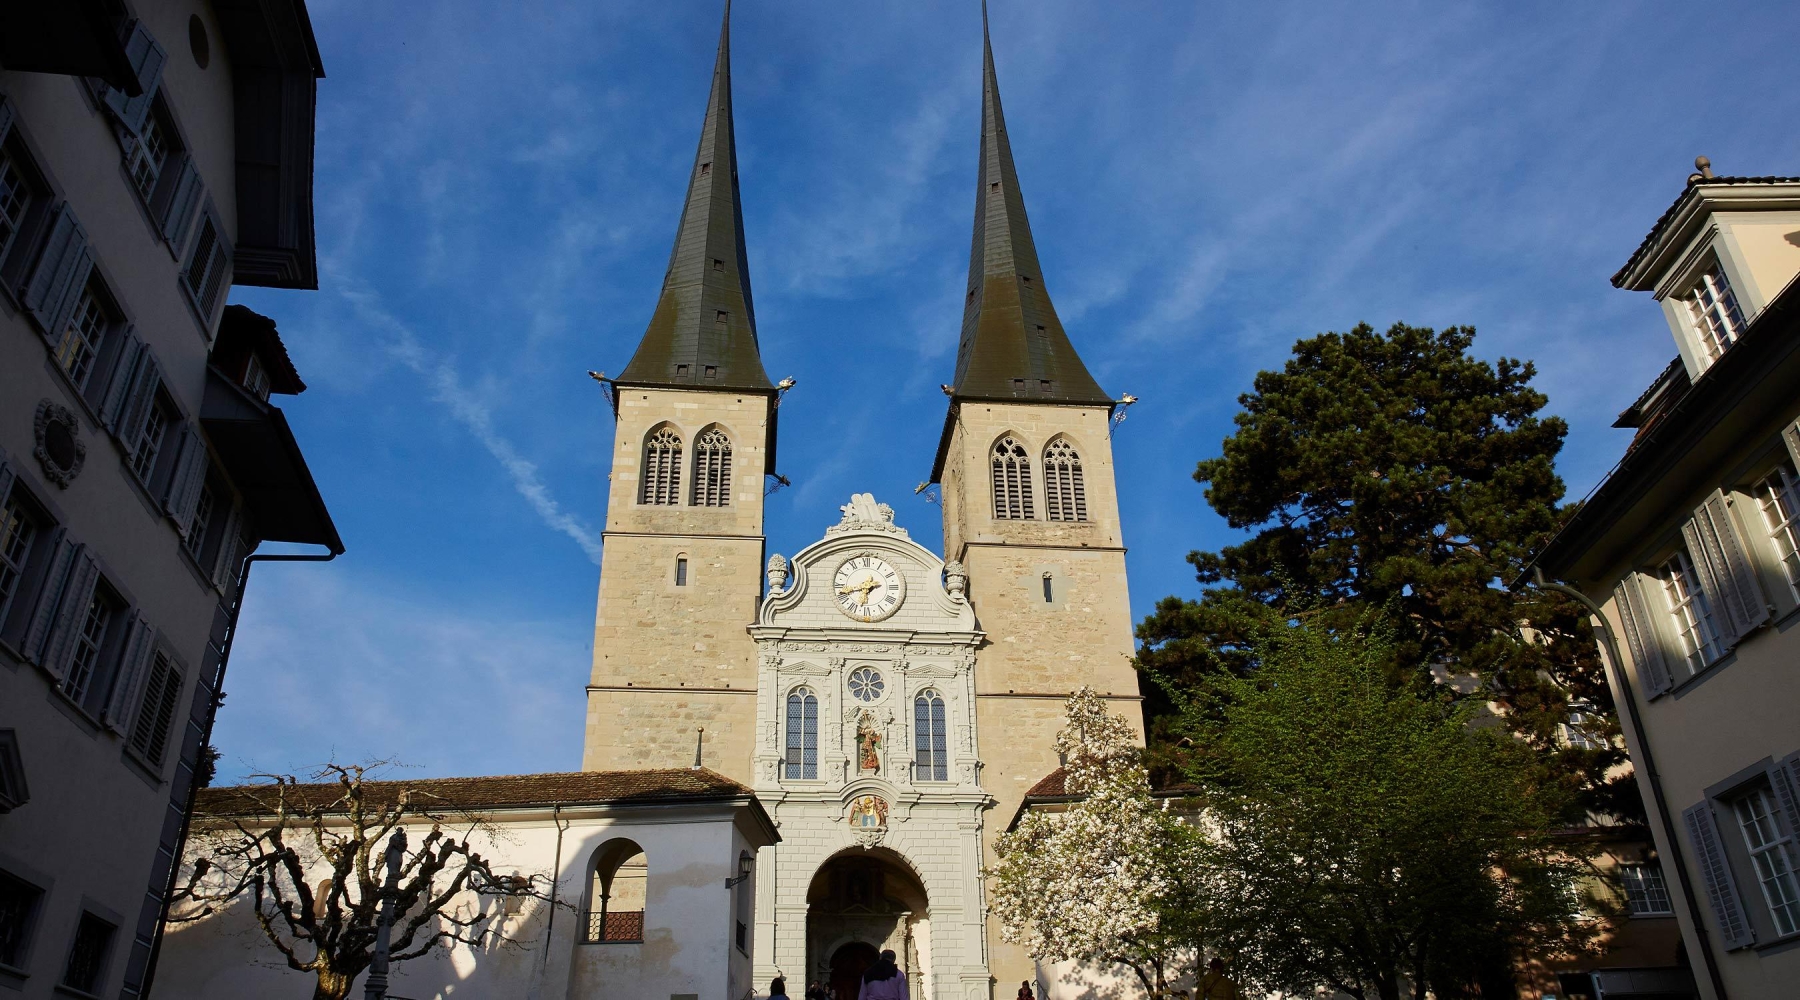 Court Church (Hofkirche)